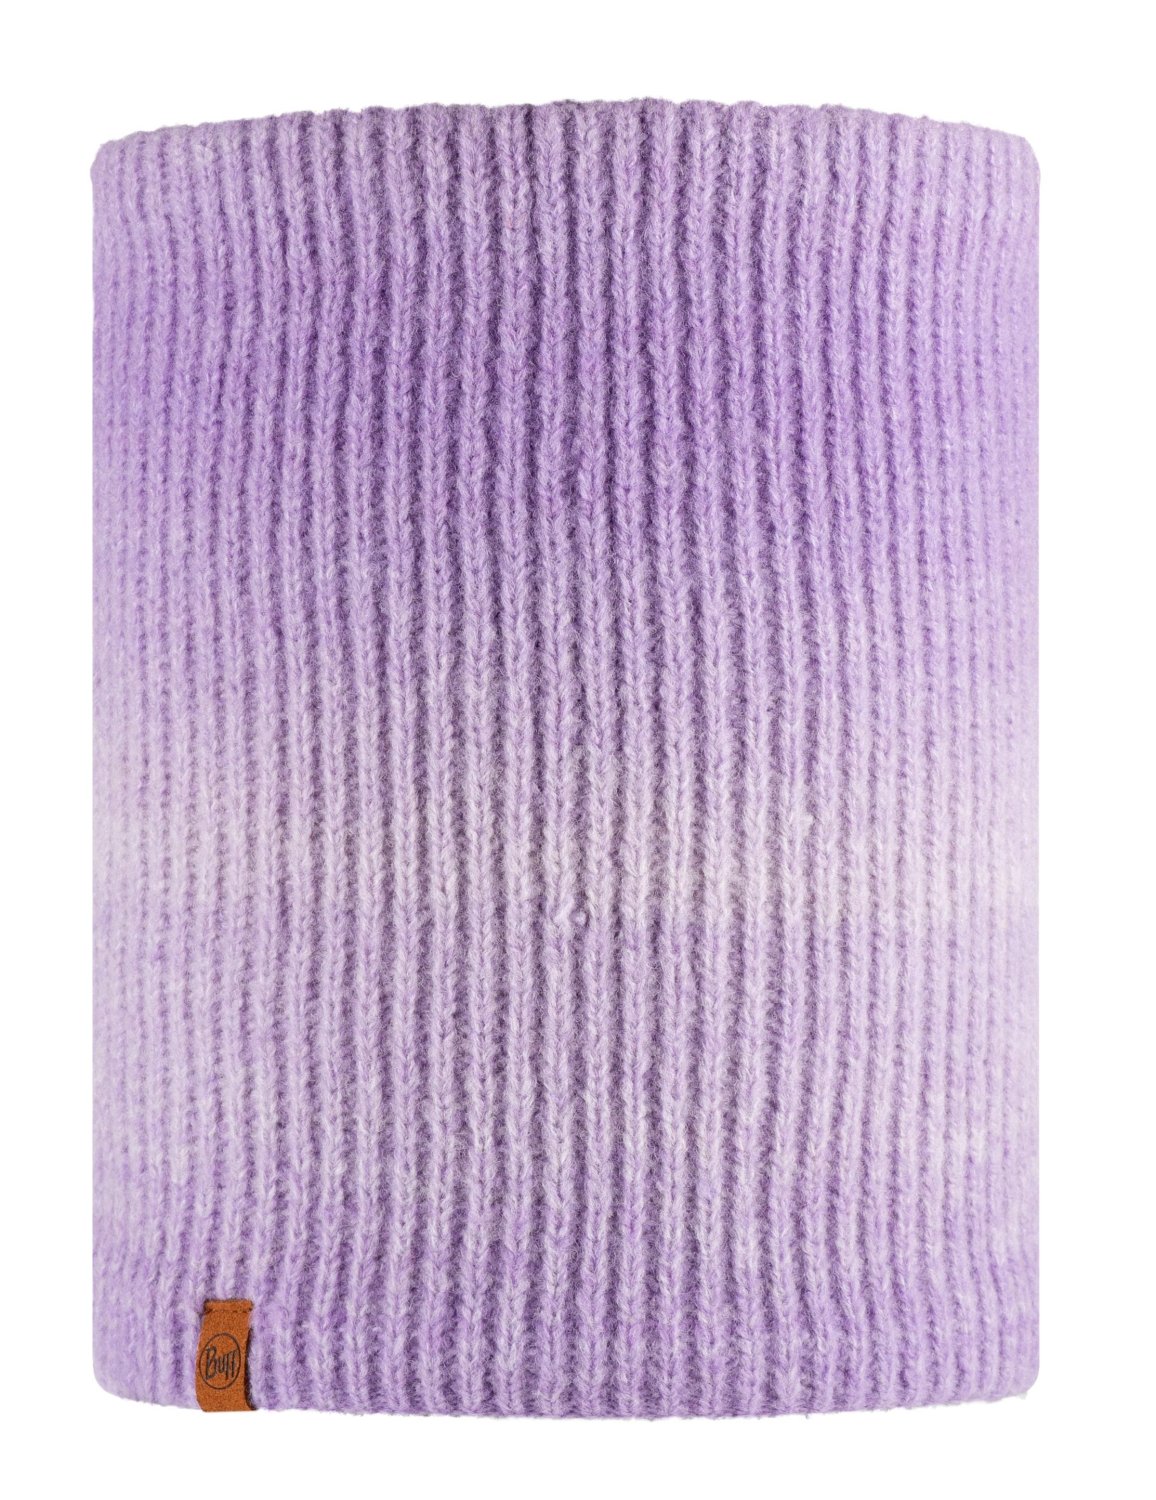 Шарф Buff Knitted & Fleece Neckwarmer Marin Lavender, US:one size, 123520.728.10.00 купить на ЖДБЗ.ру